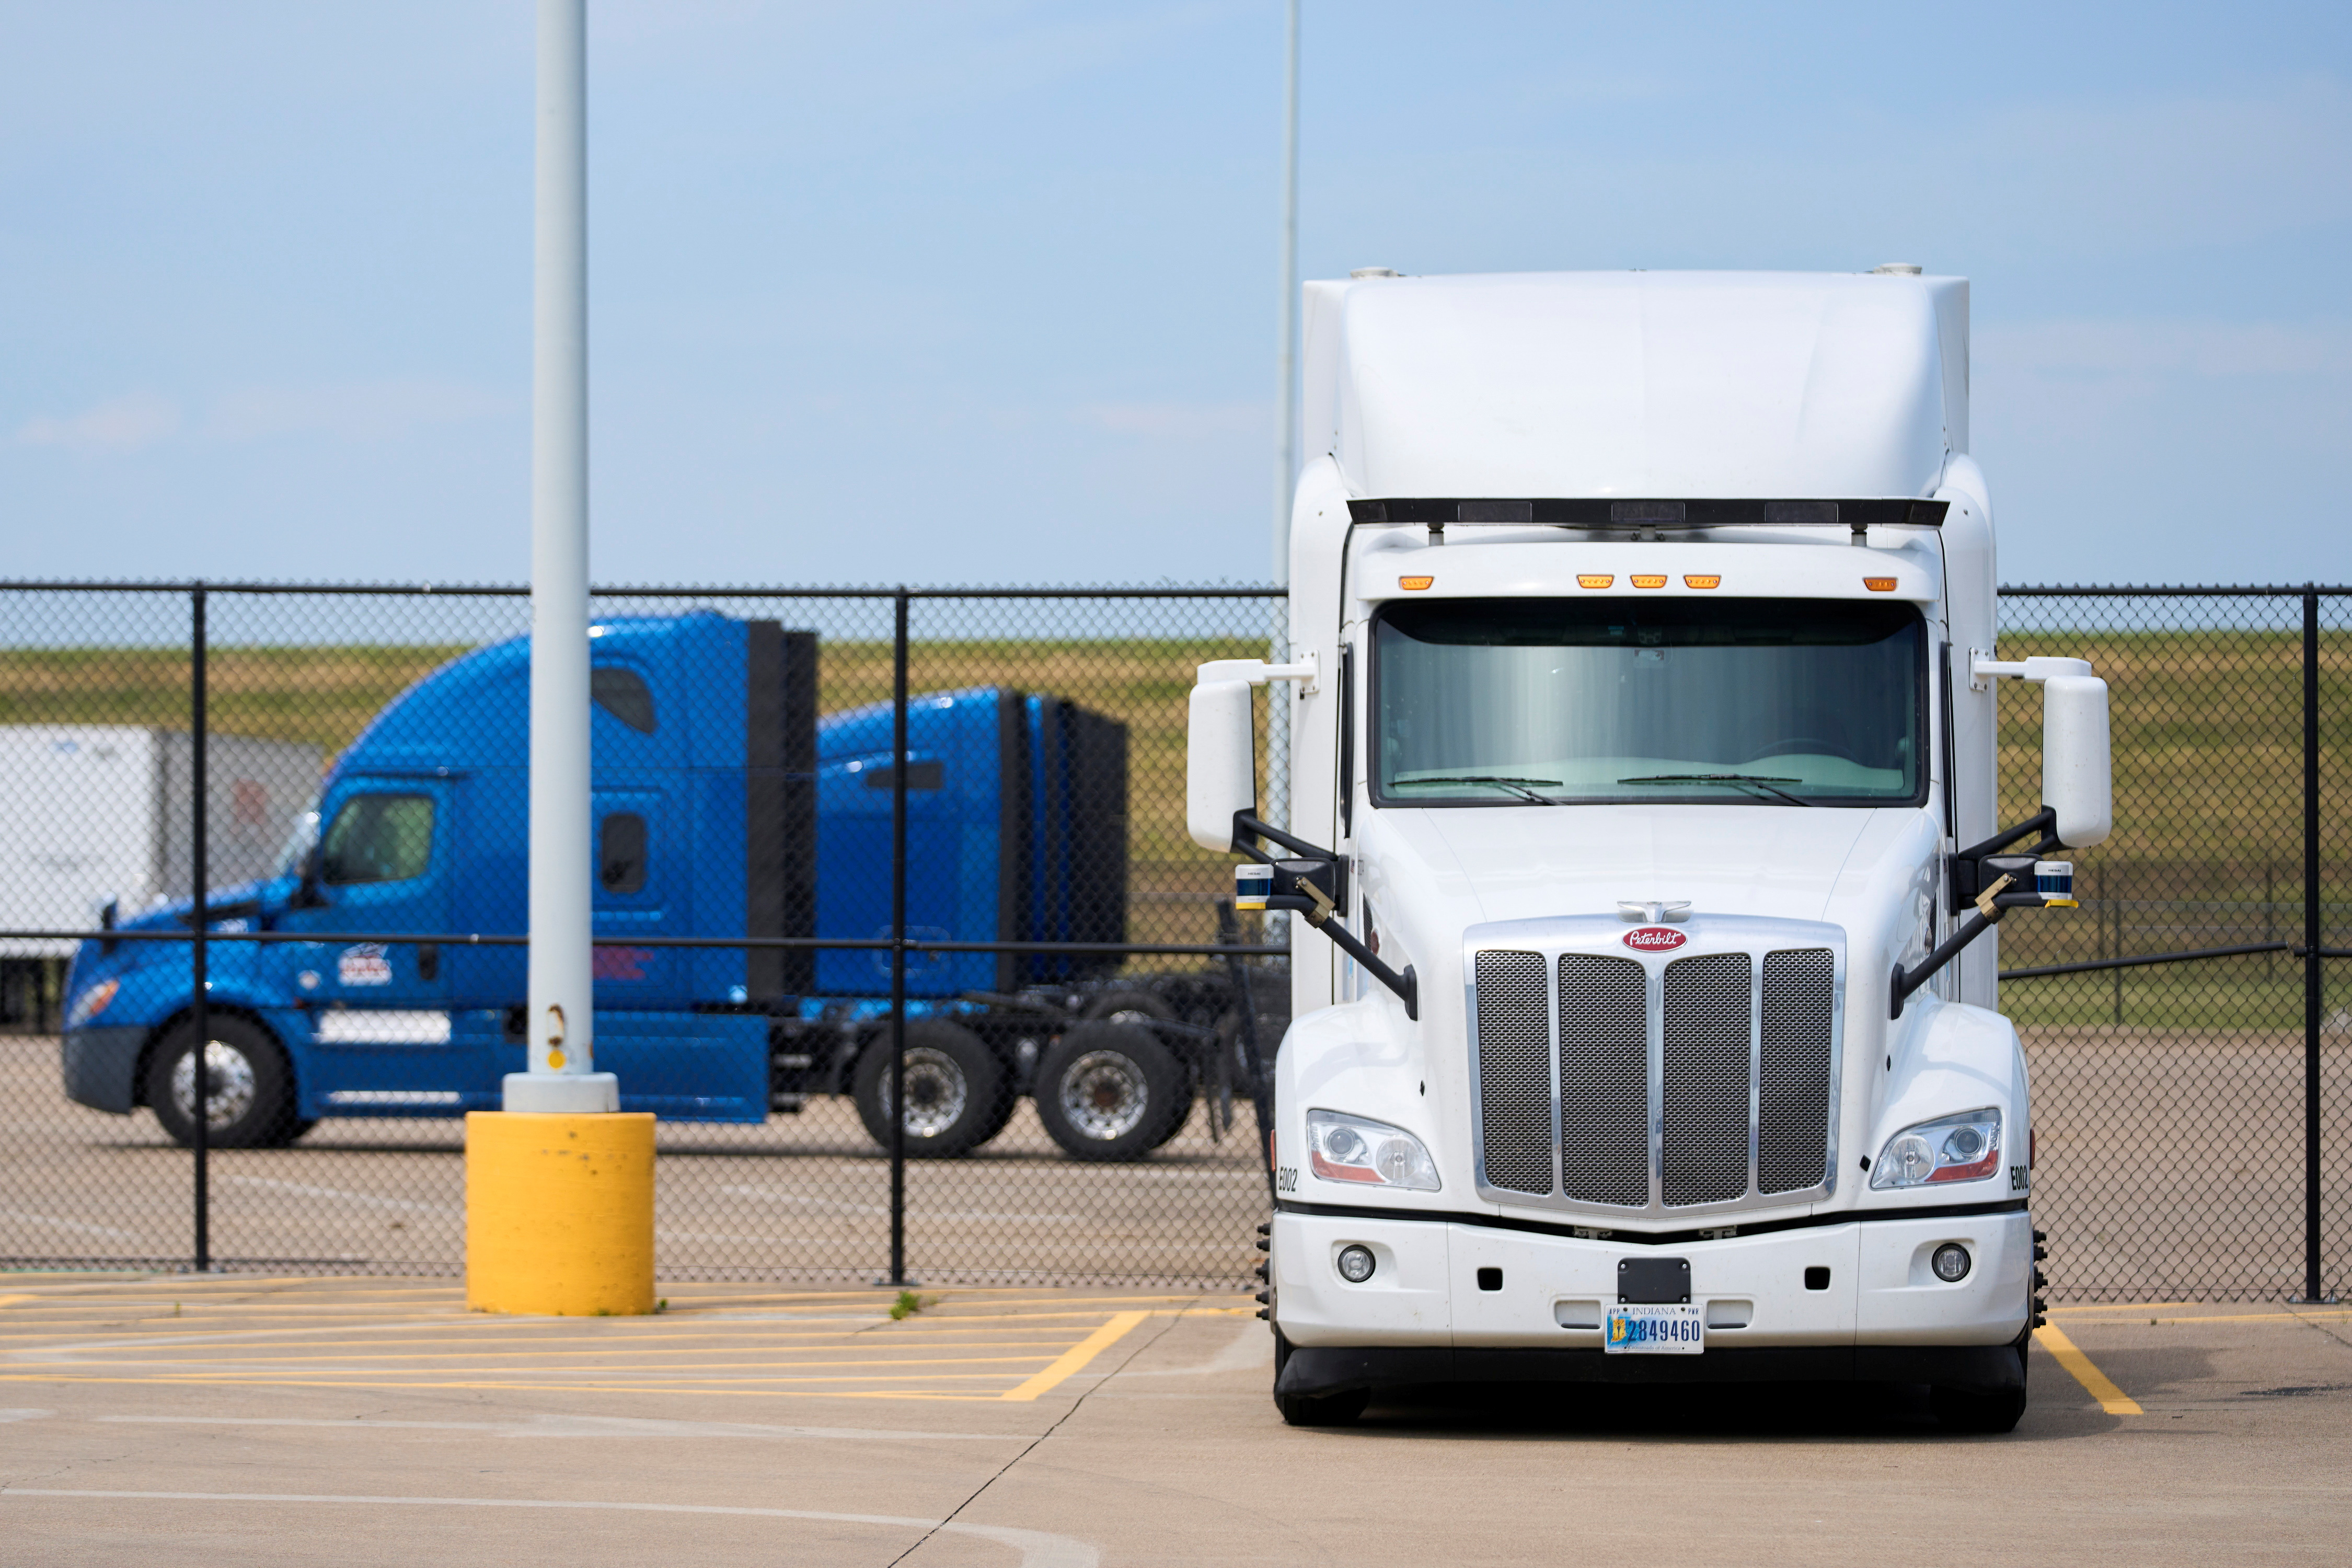 AV trucks are parked at AllianceTexas in Fort Worth